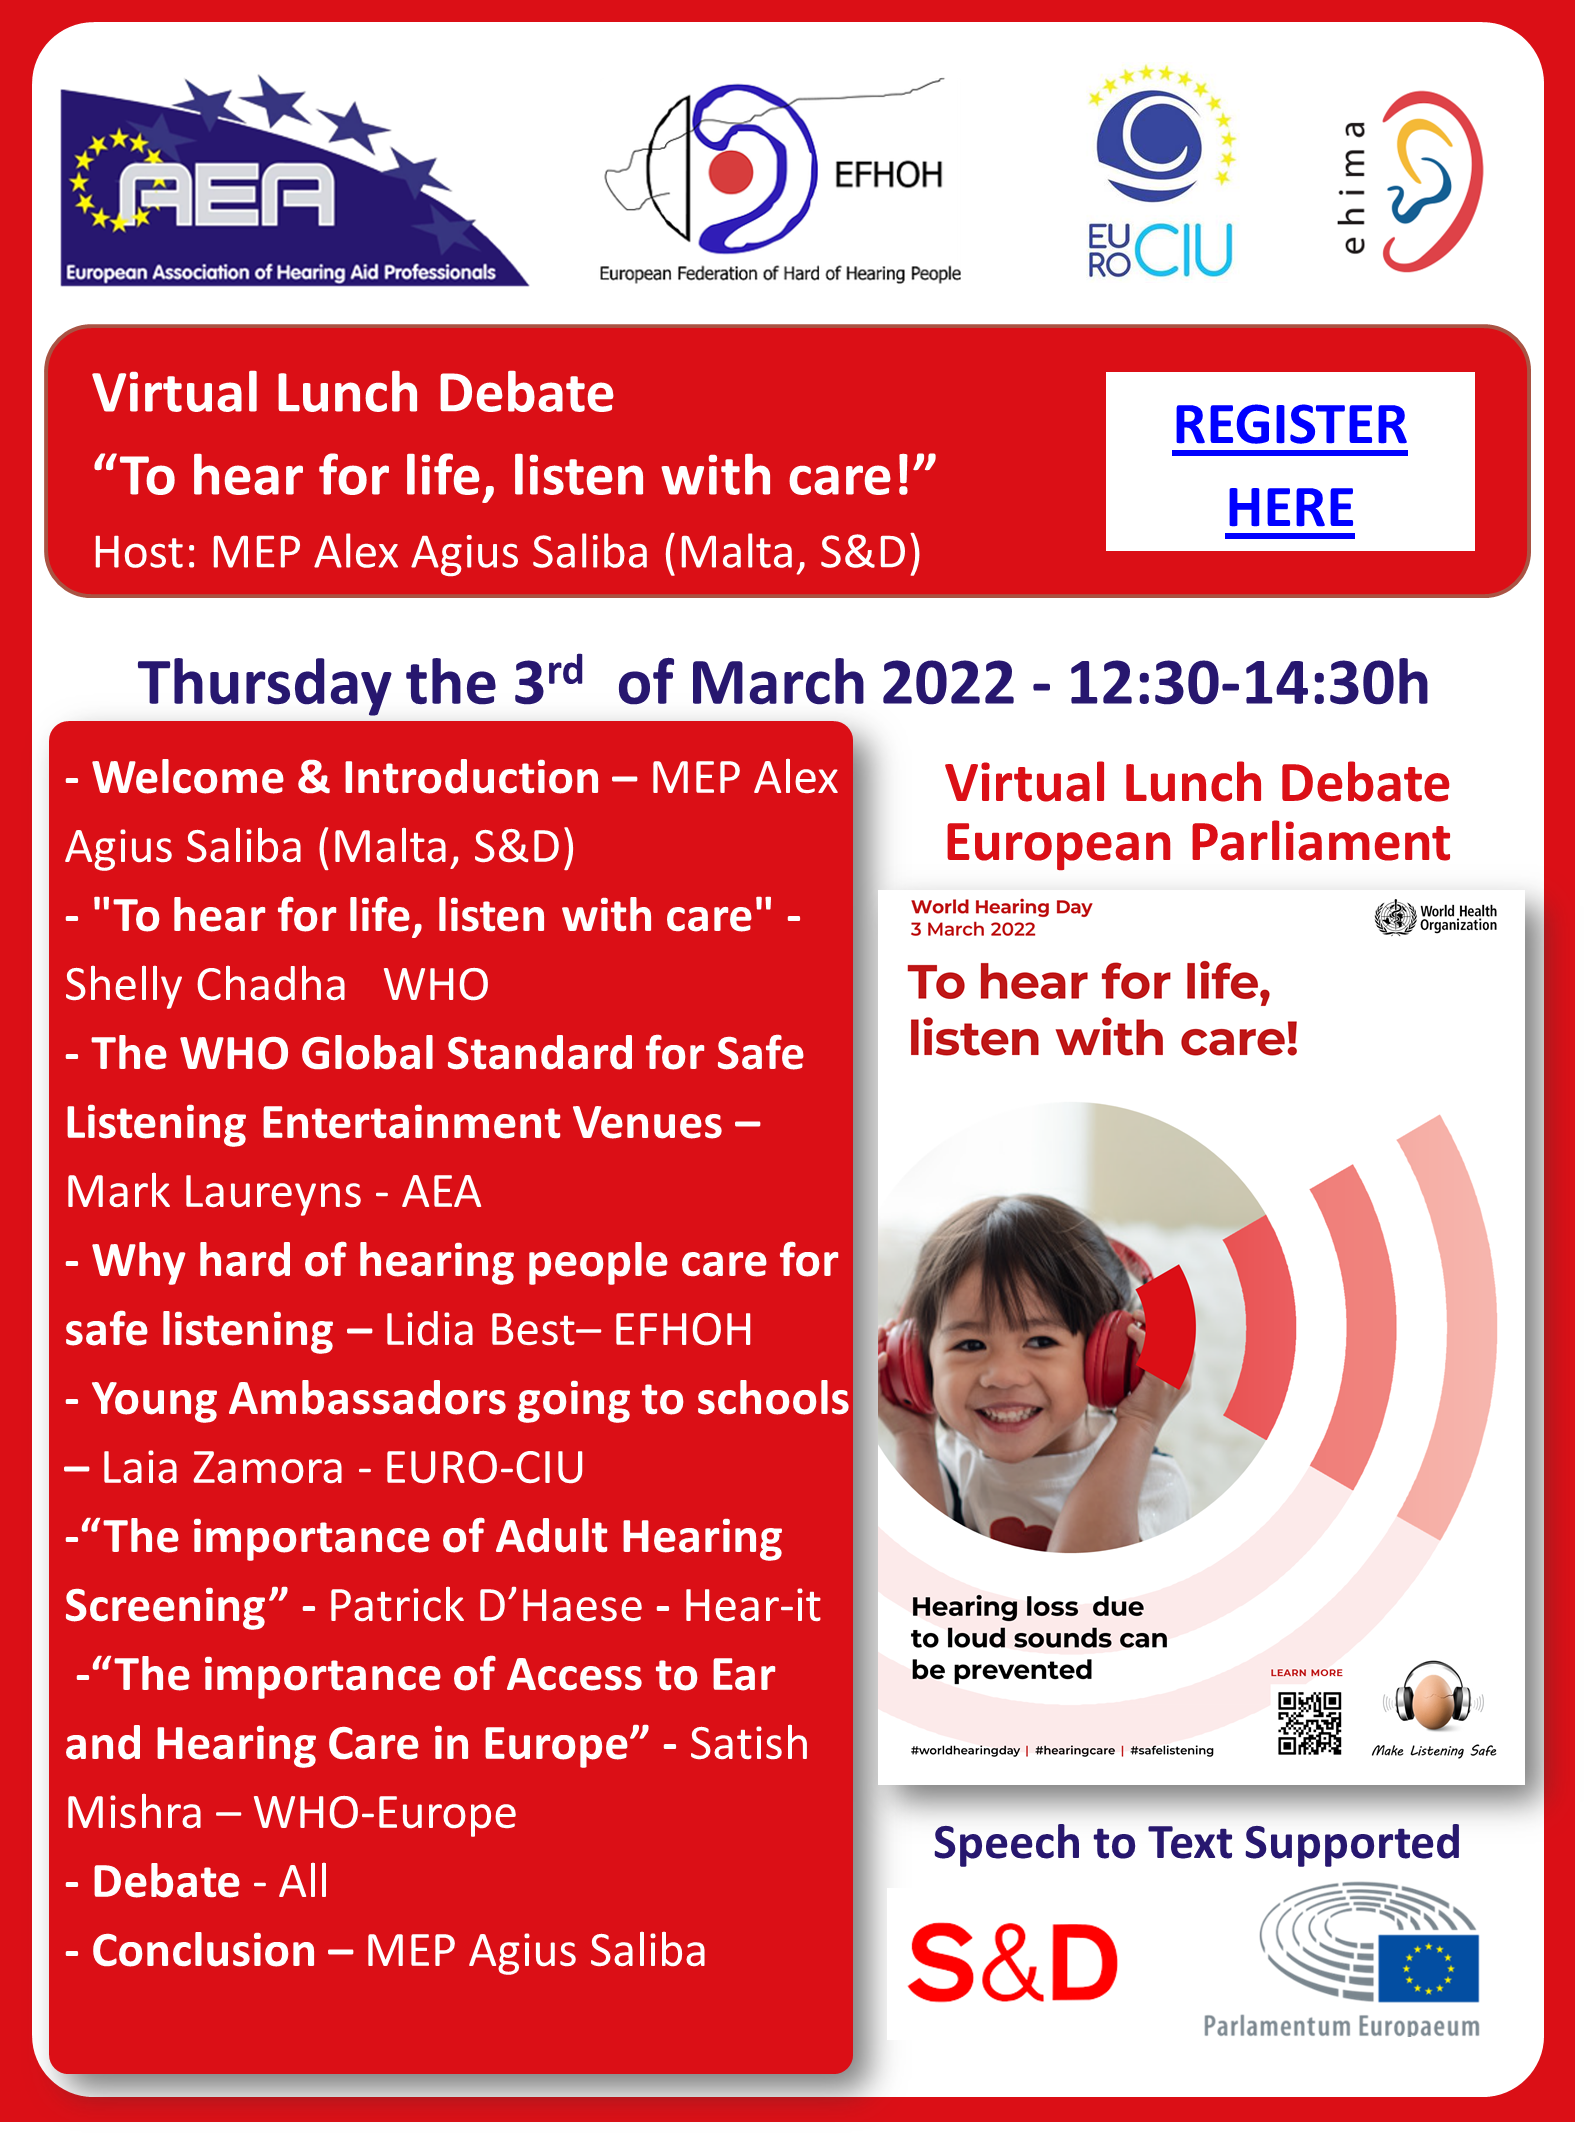 Virtual Lunch Debate at the European Parliment 2022